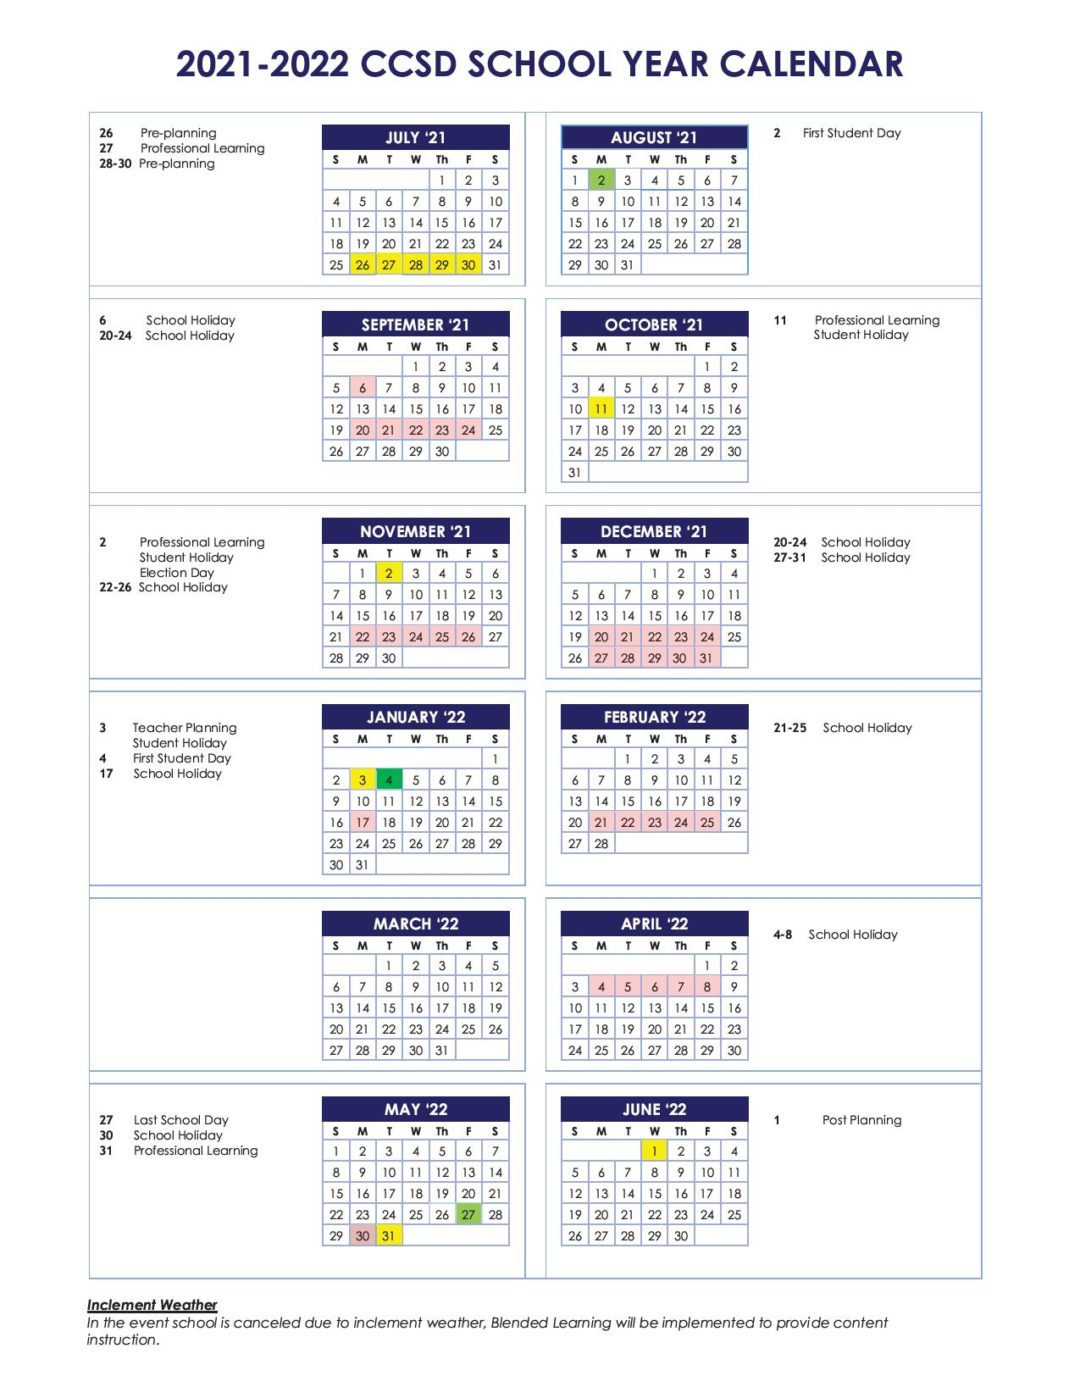 Cherokee County School Calendar 20212022 in PDF